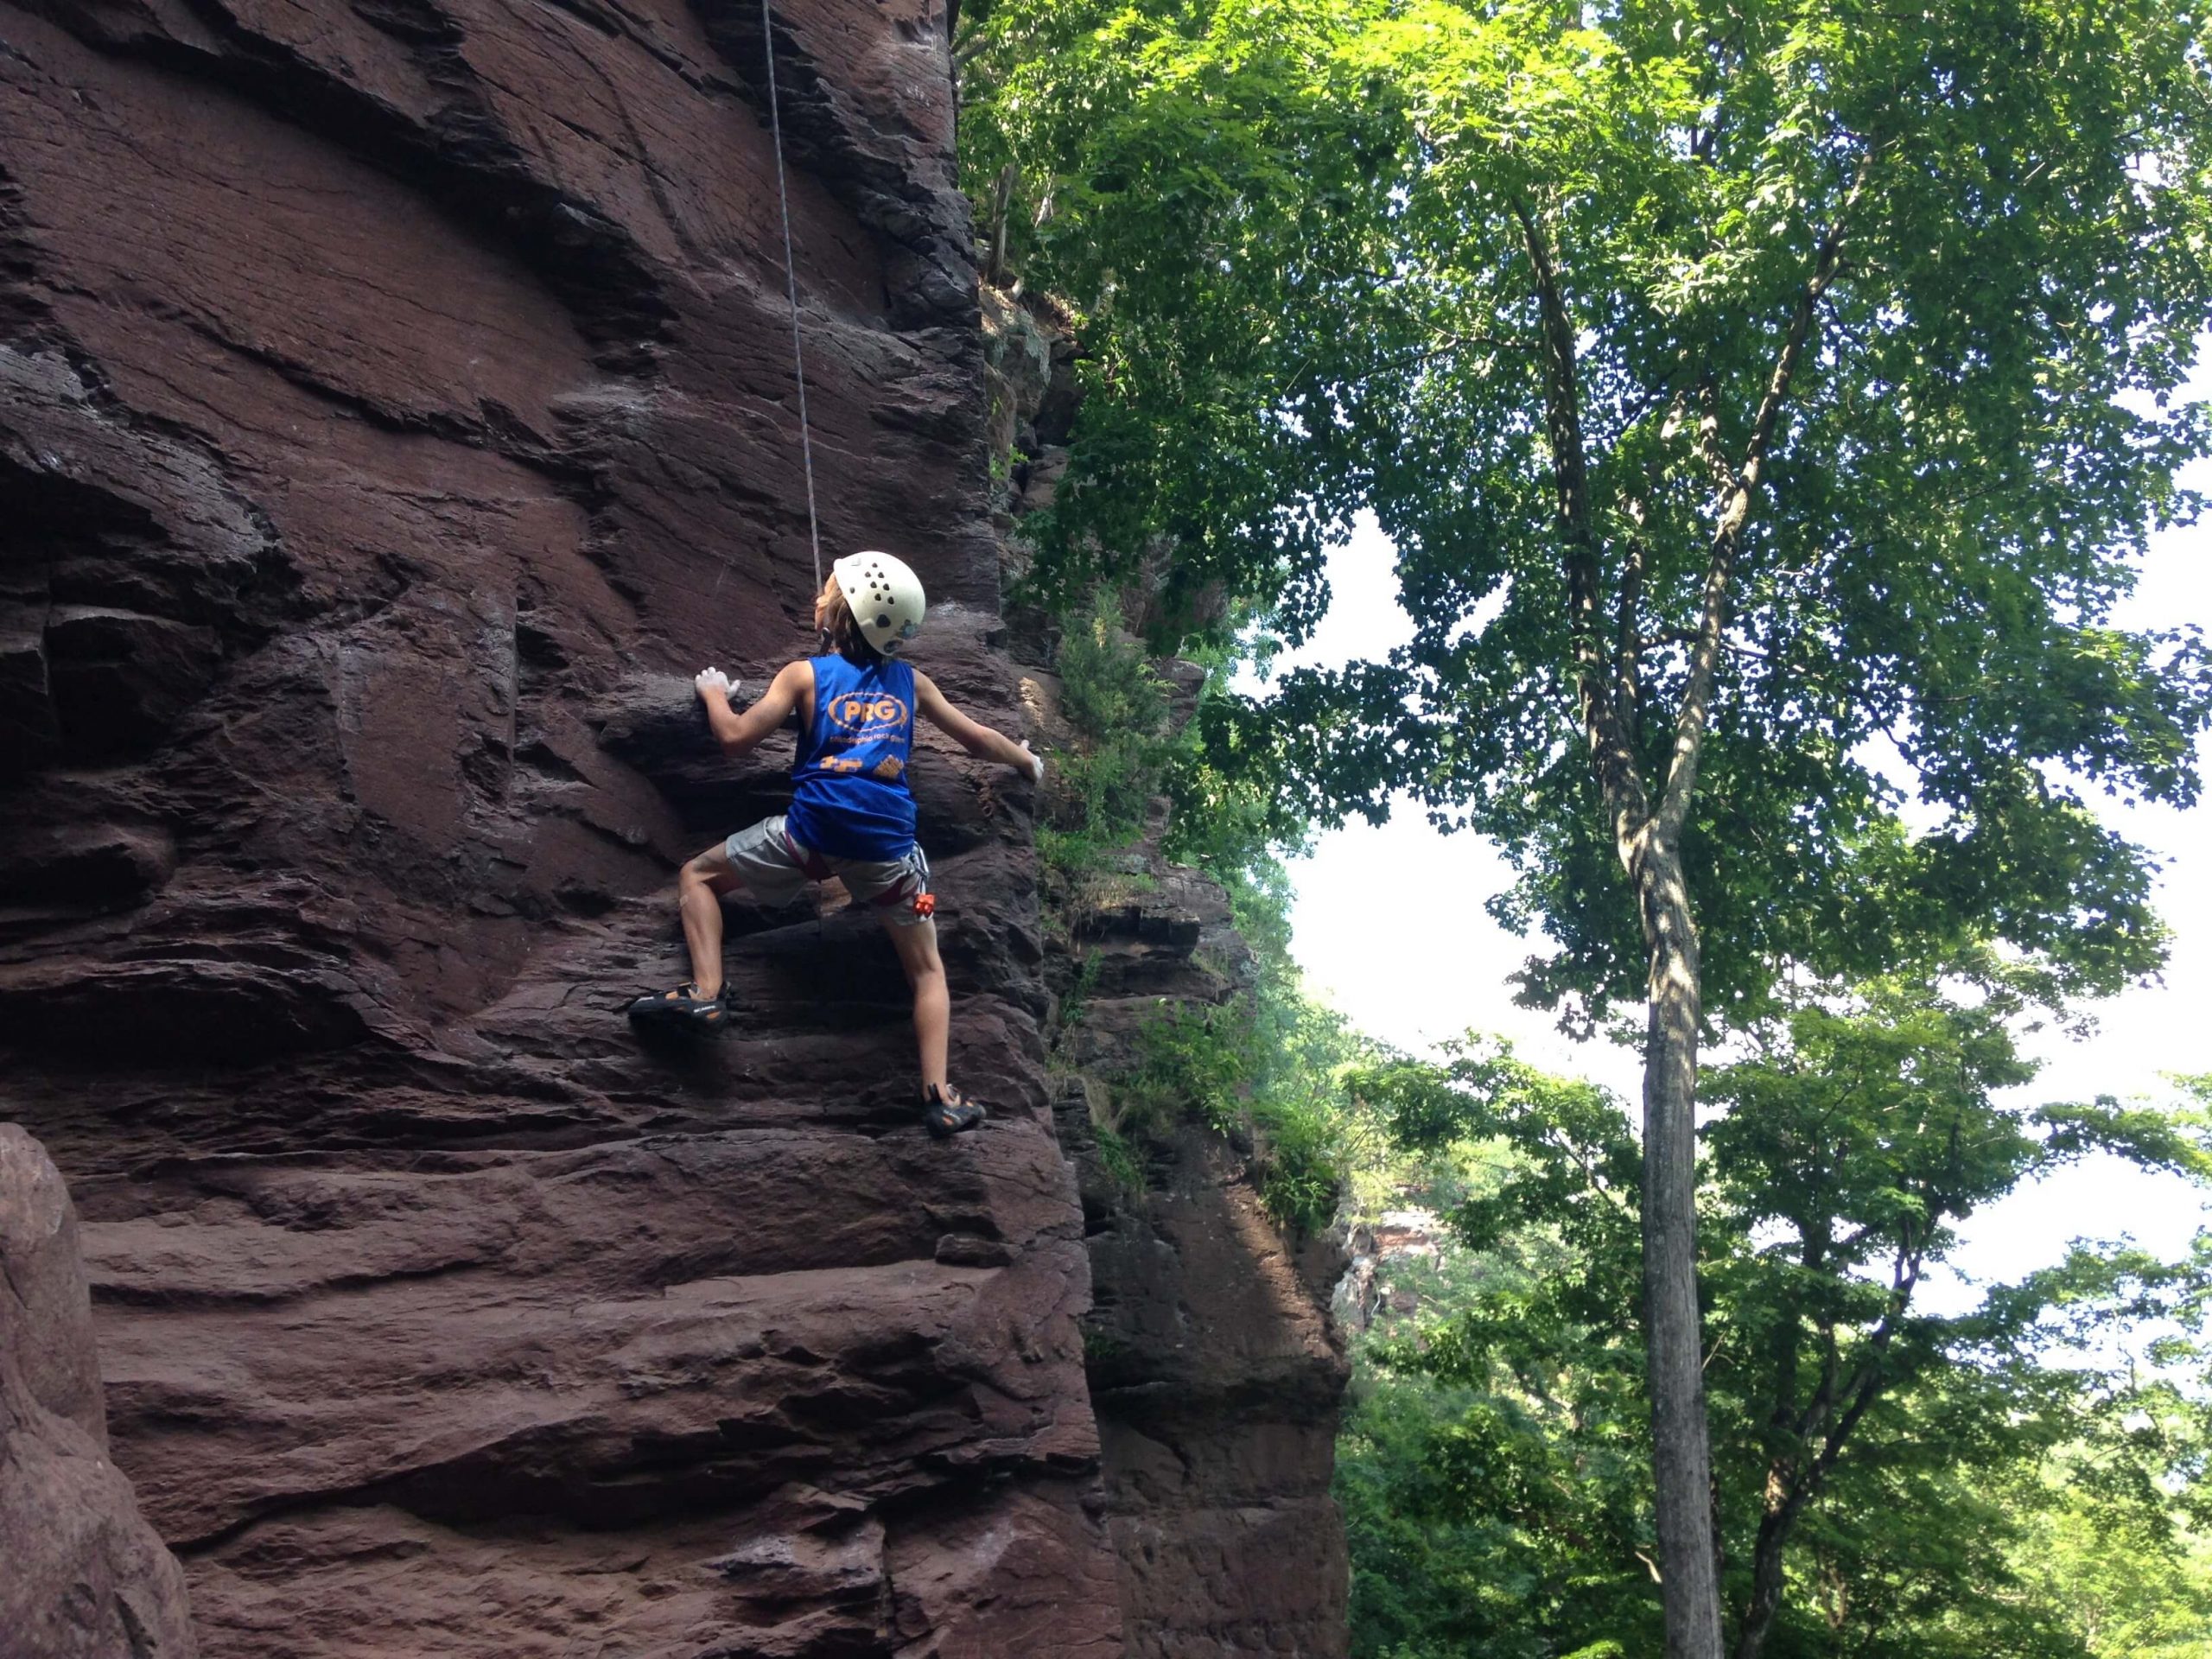 Kids Summer Camp Rock Climbing Program East Falls Pa